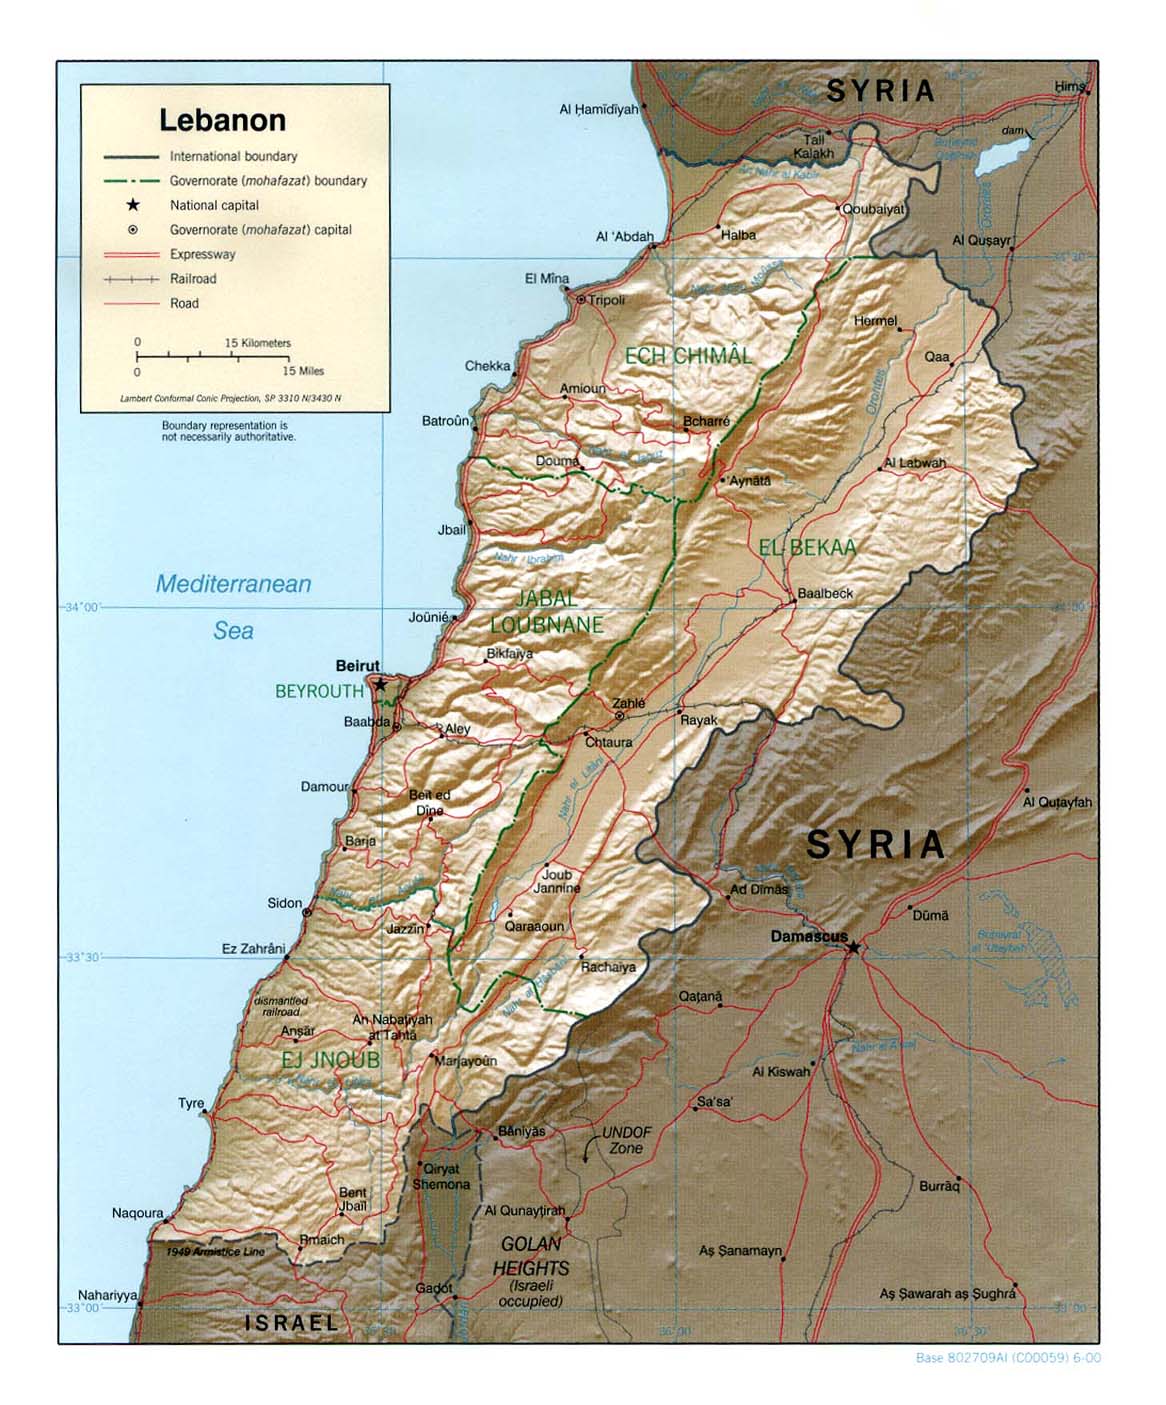 Map of Lebanon Lebanon [Shaded Relief Map] 2000 (269K) 